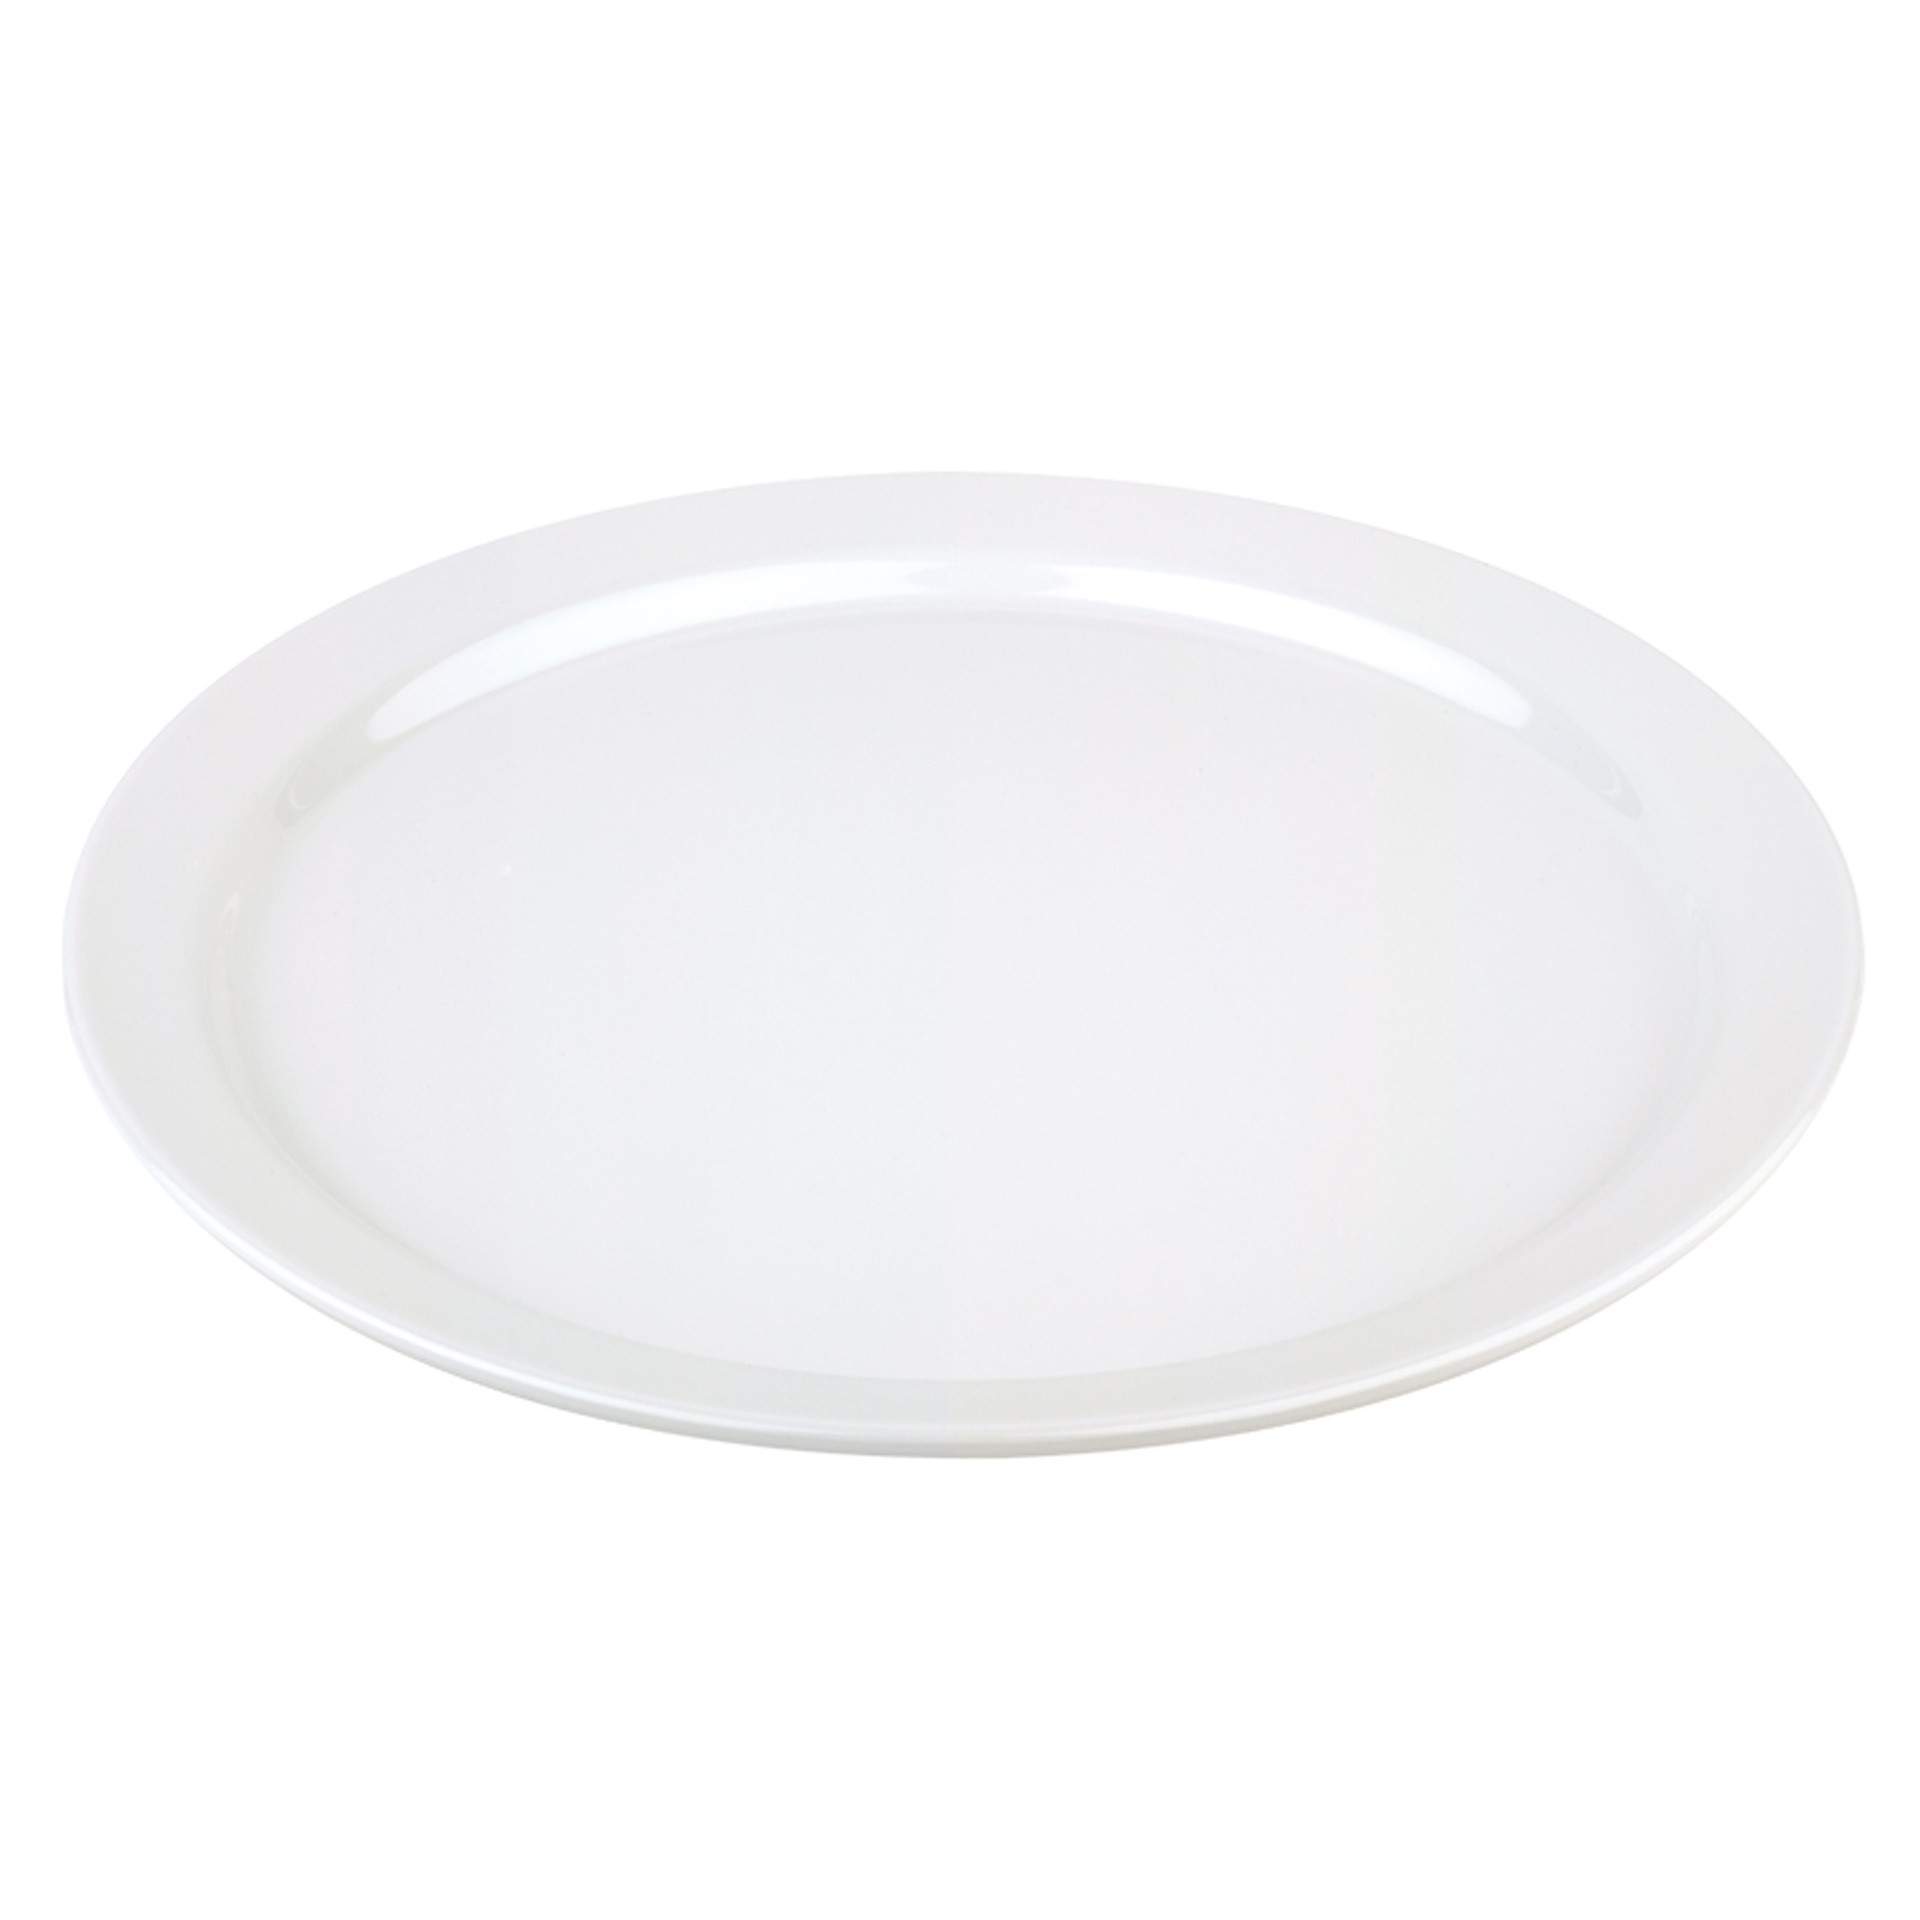 Tablett / Teller - Serie Pure - weiß - rund - Abm. 2,5 cm - Ø 31,0 cm - Melamin - 83884-B